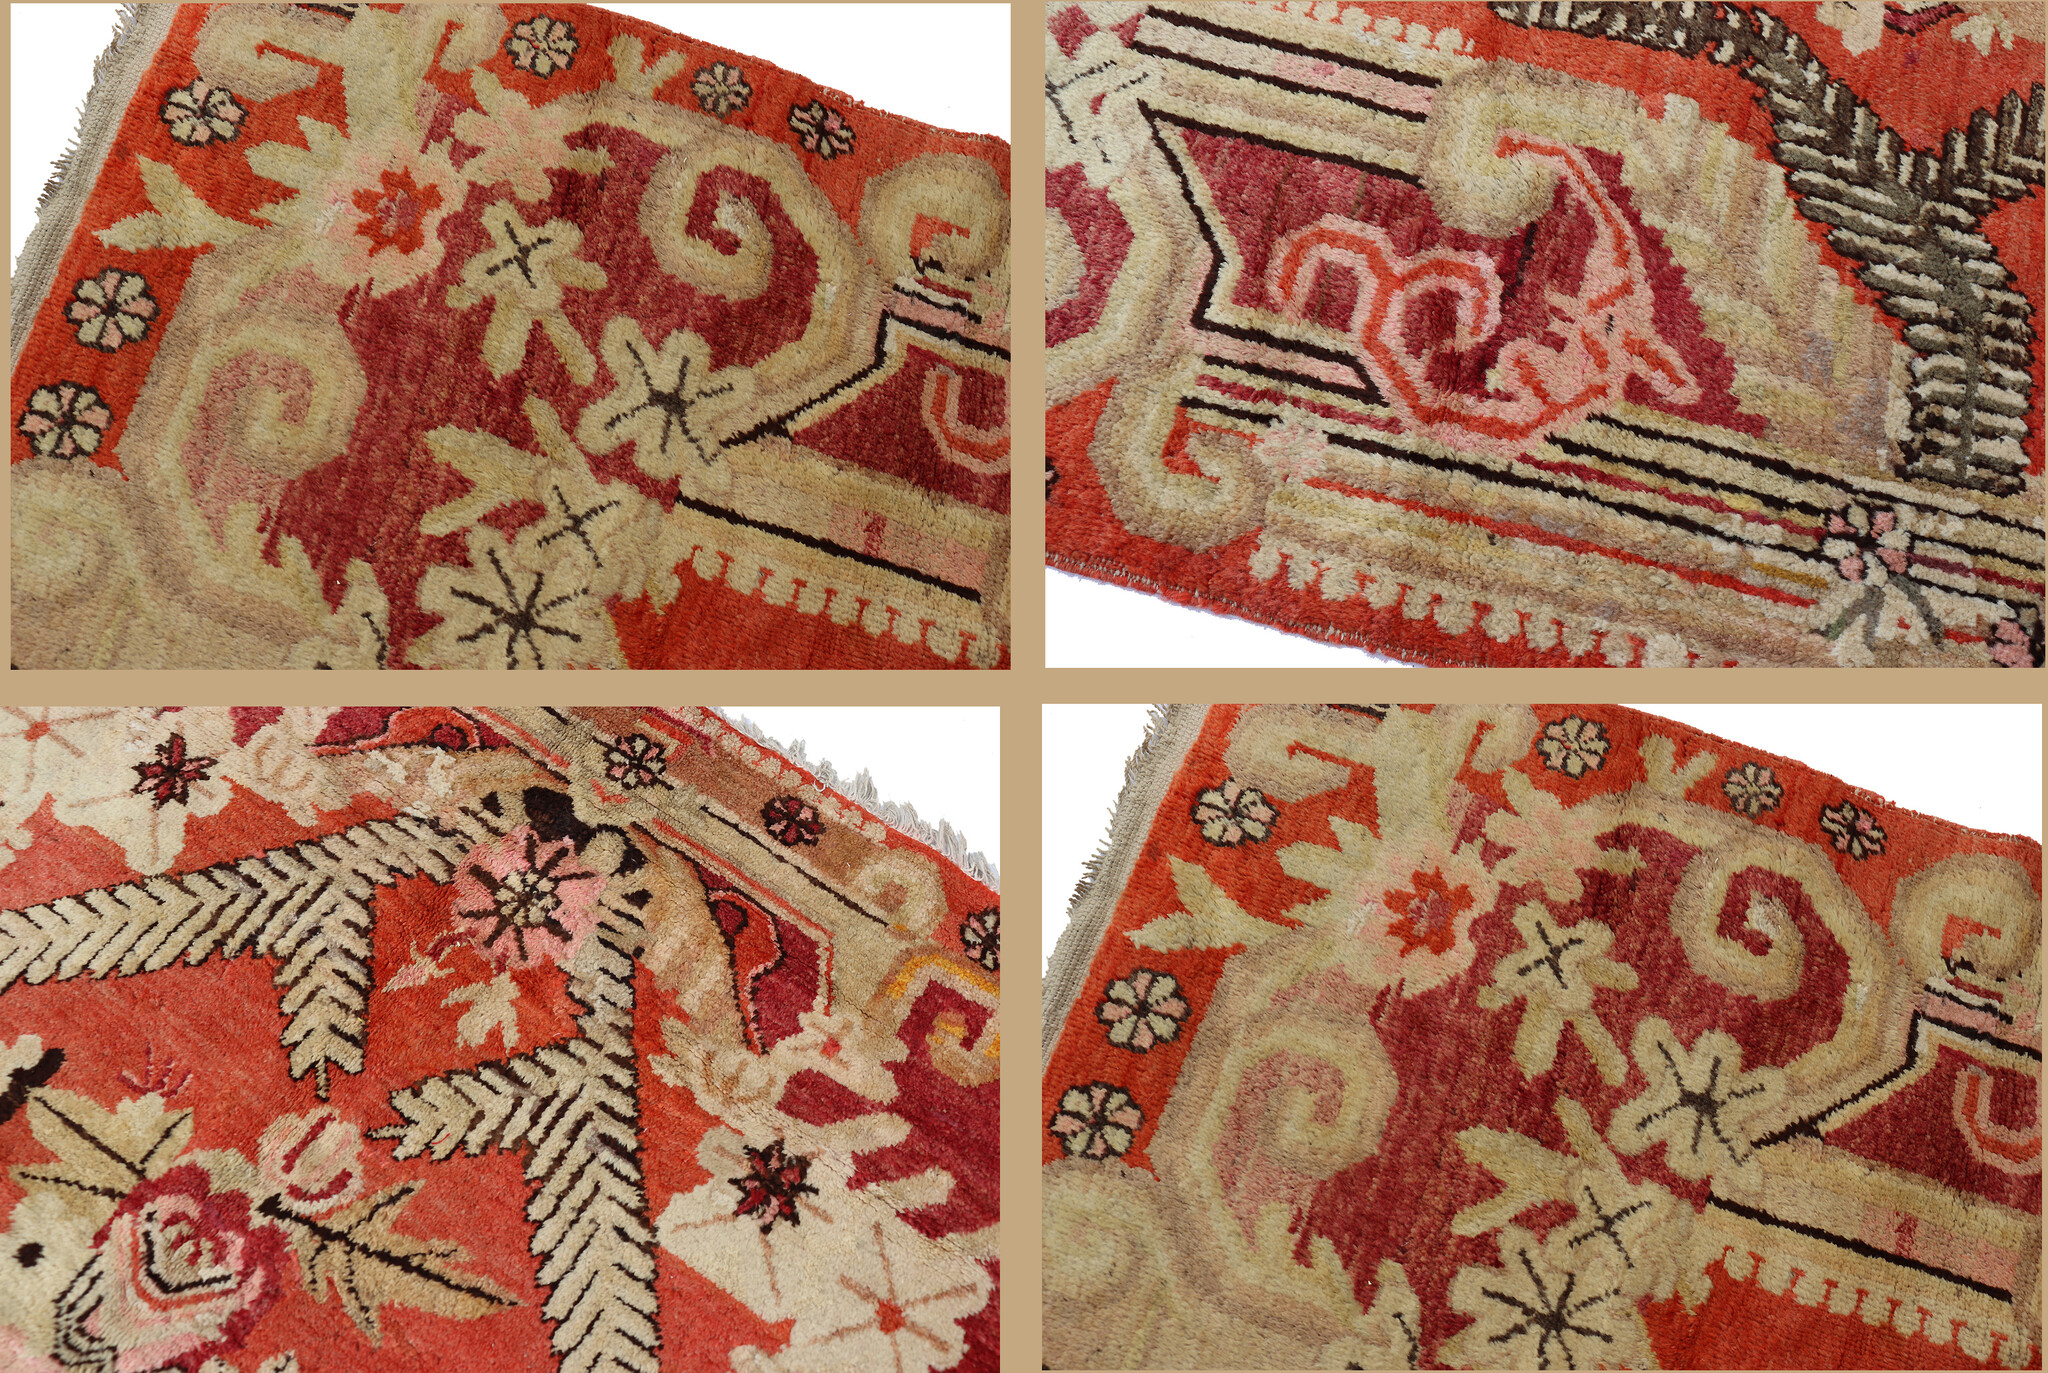 215x140 cm original antique Khotan Samarkand rug Chinese Turkestan hand knotted carpet No:23B